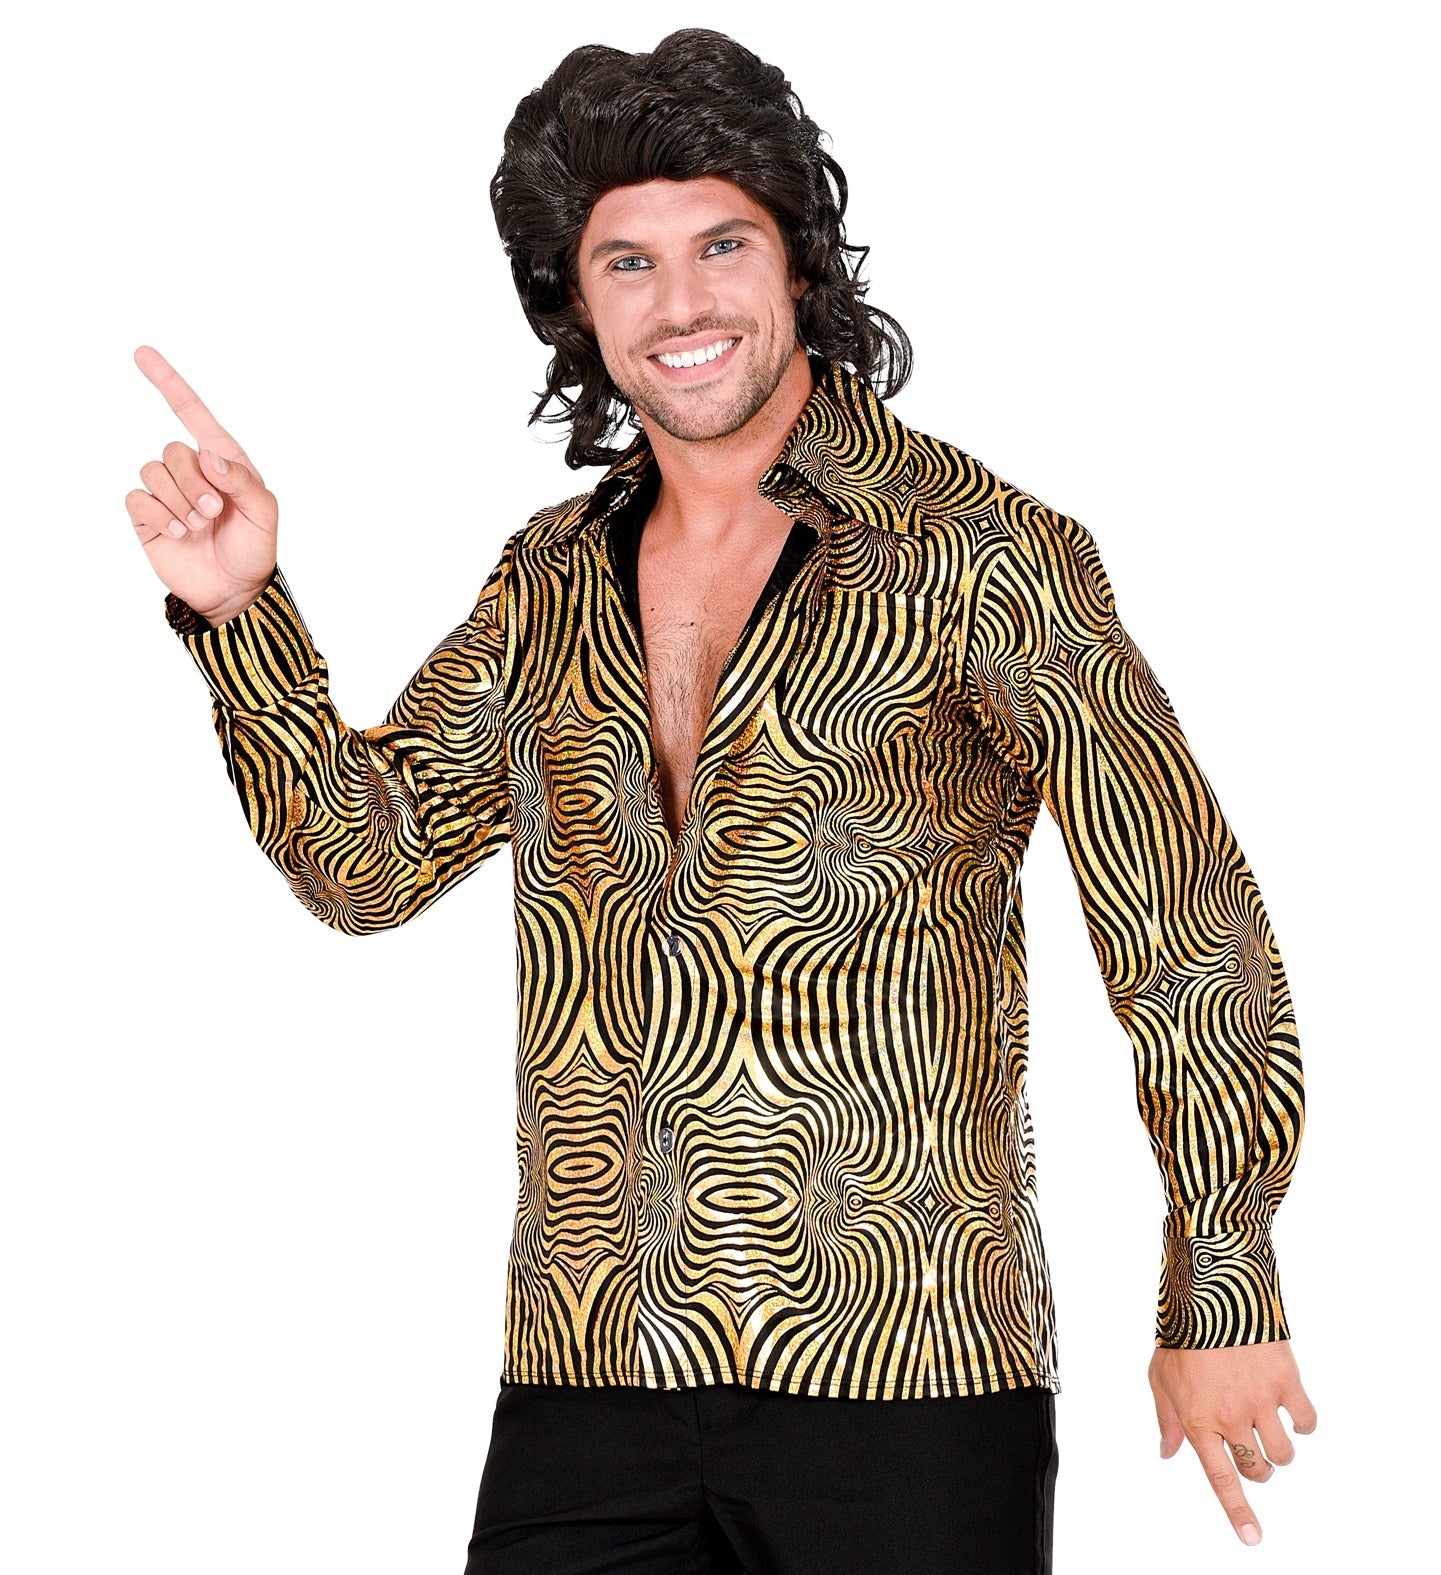 Widmann - Jaren 80 & 90 Kostuum - 70s Gouden Exotische Joe Disco Man - goud - Large / XL - Carnavalskleding - Verkleedkleding